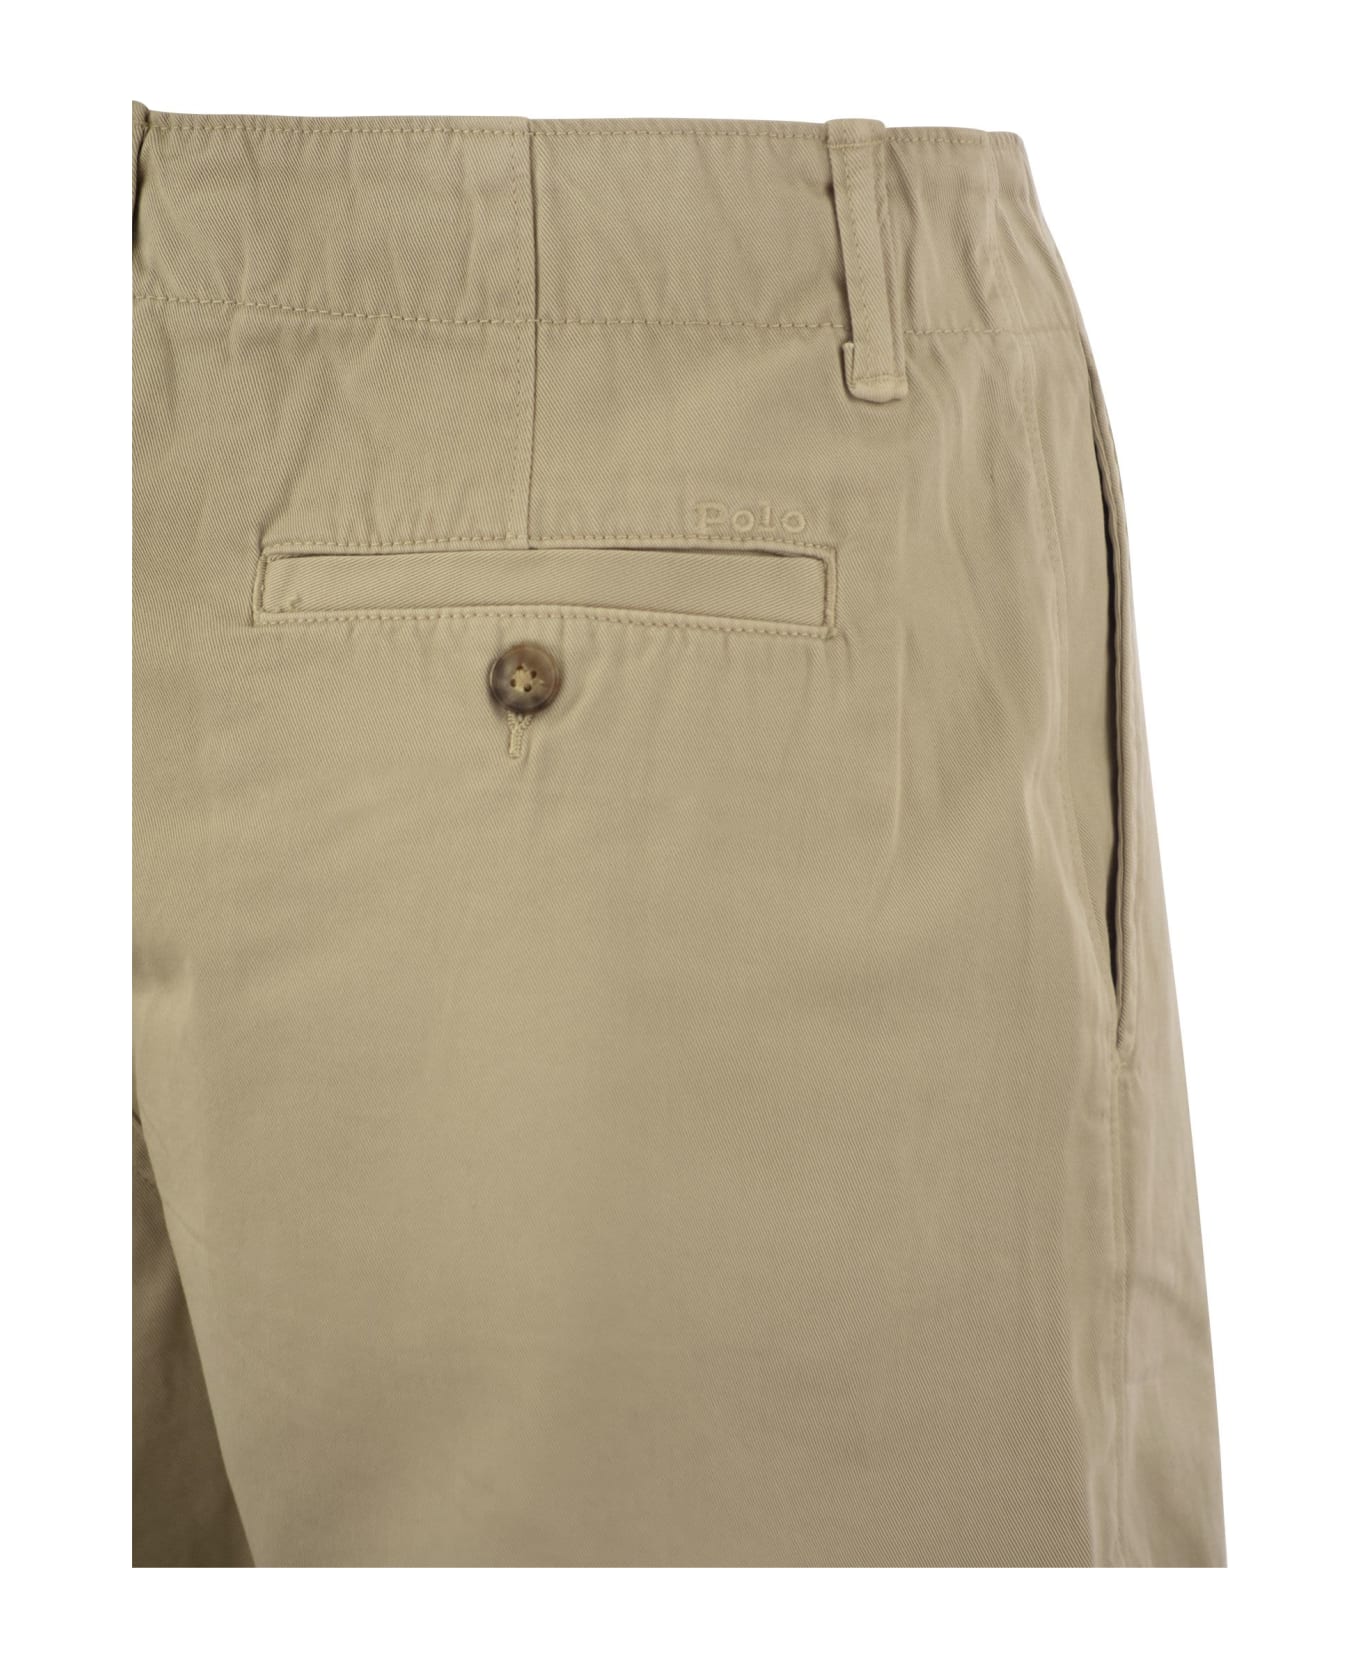 Polo Ralph Lauren Beige Cotton Shorts - KHAKI